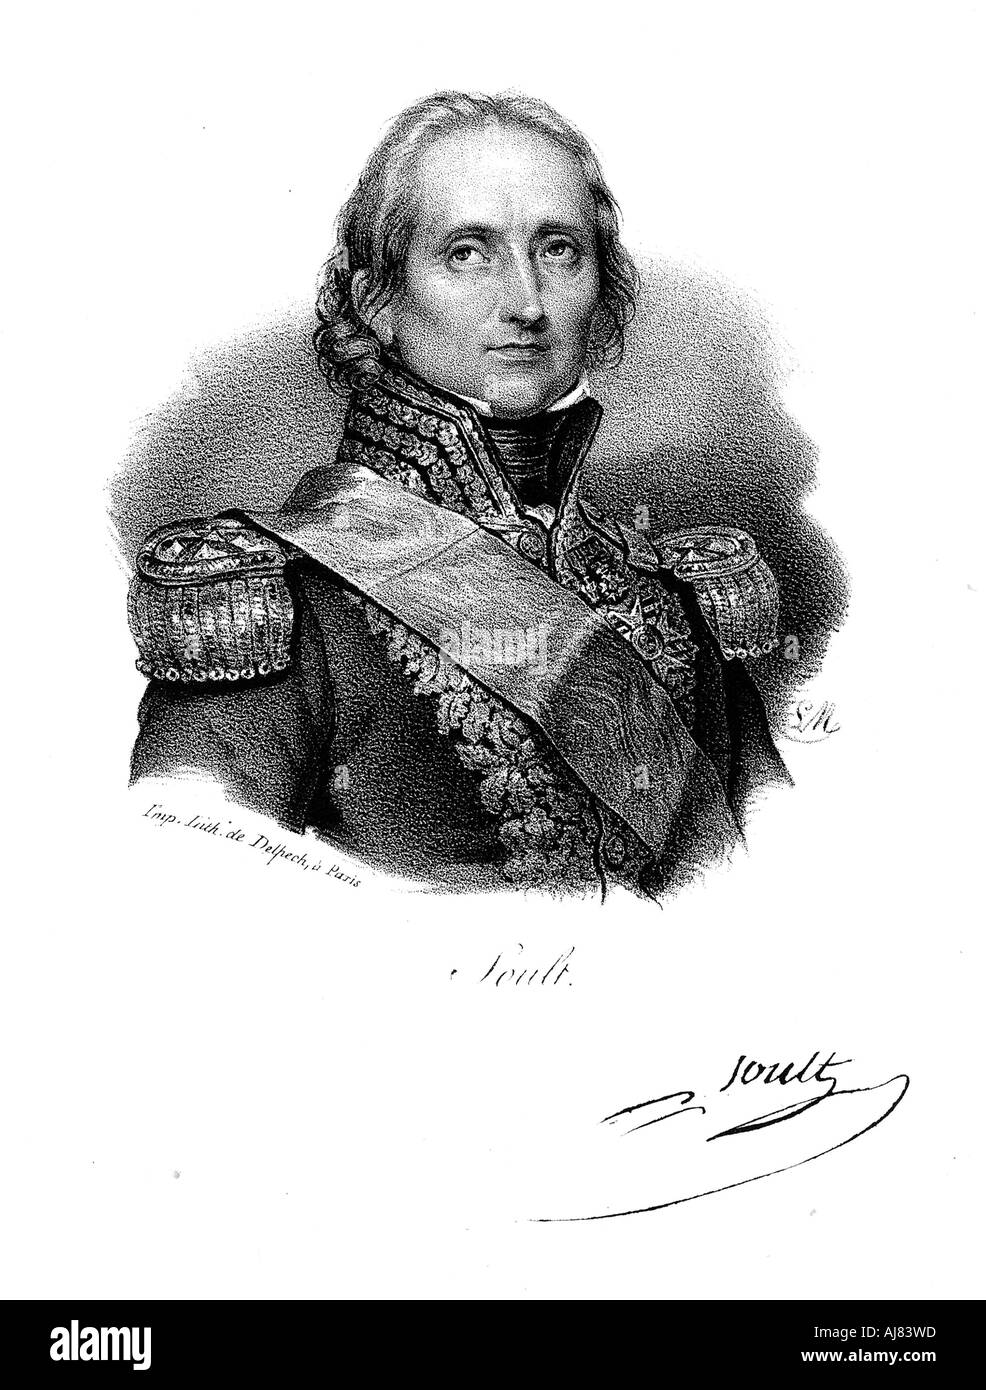 Nicolas Jean de Dieu Soult, French soldier and statesman, c1830. Artist: Delpech Stock Photo